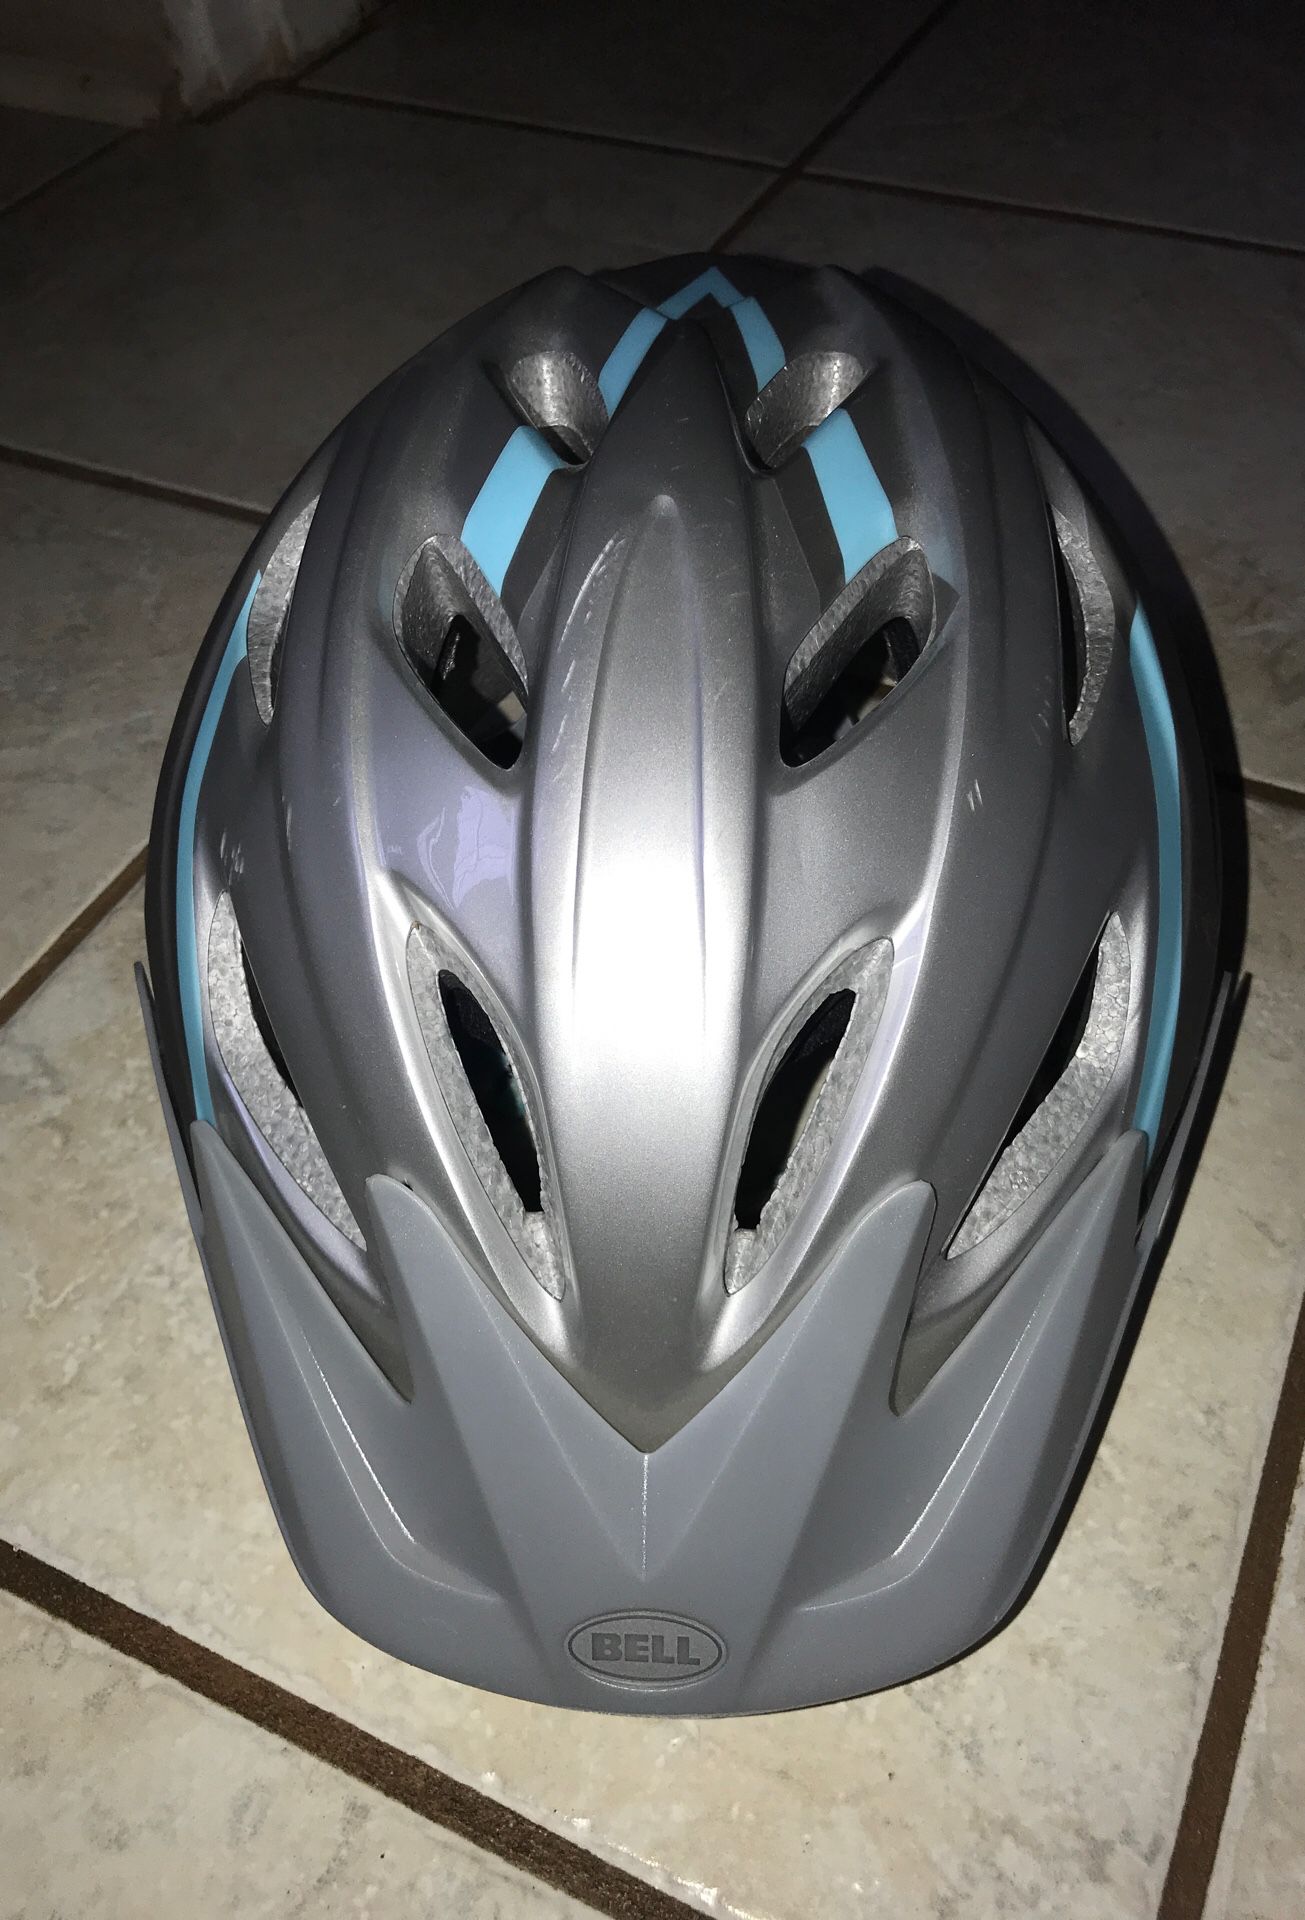 Bell Women's Bicycle Helmet 10$ OBO